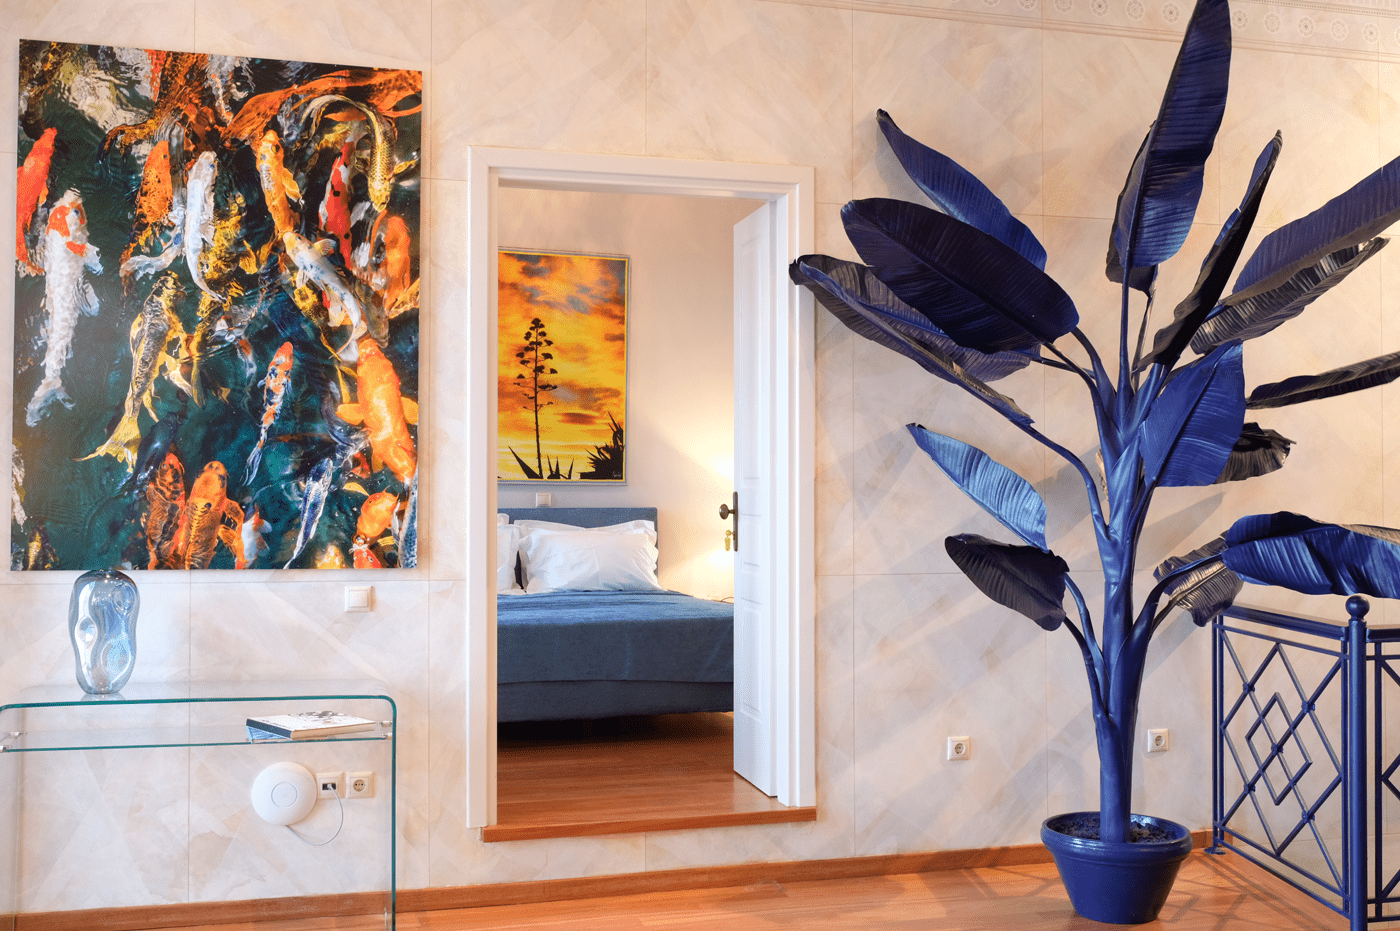 Villa Selena Superior Double Room with Sea Views